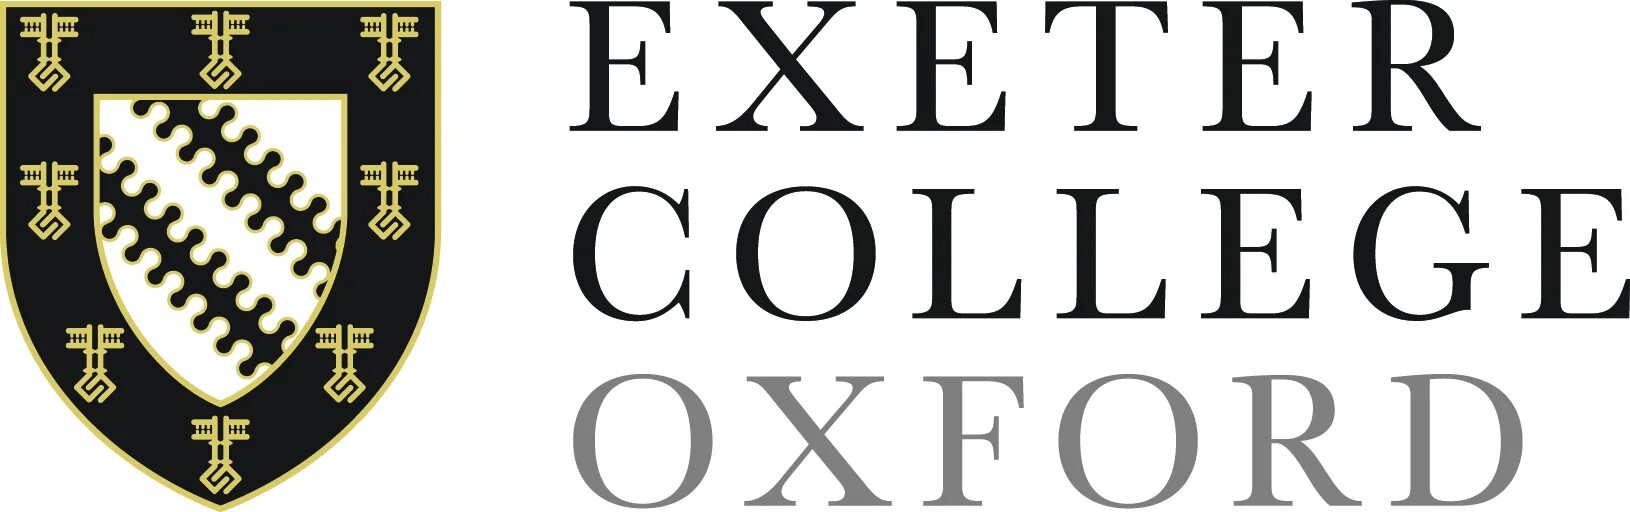 Эксетер-колледж. Exeter College Oxford. Оксфордском колледже Эксетер Толкиен. Эксетерский колледж 1800. Sister college